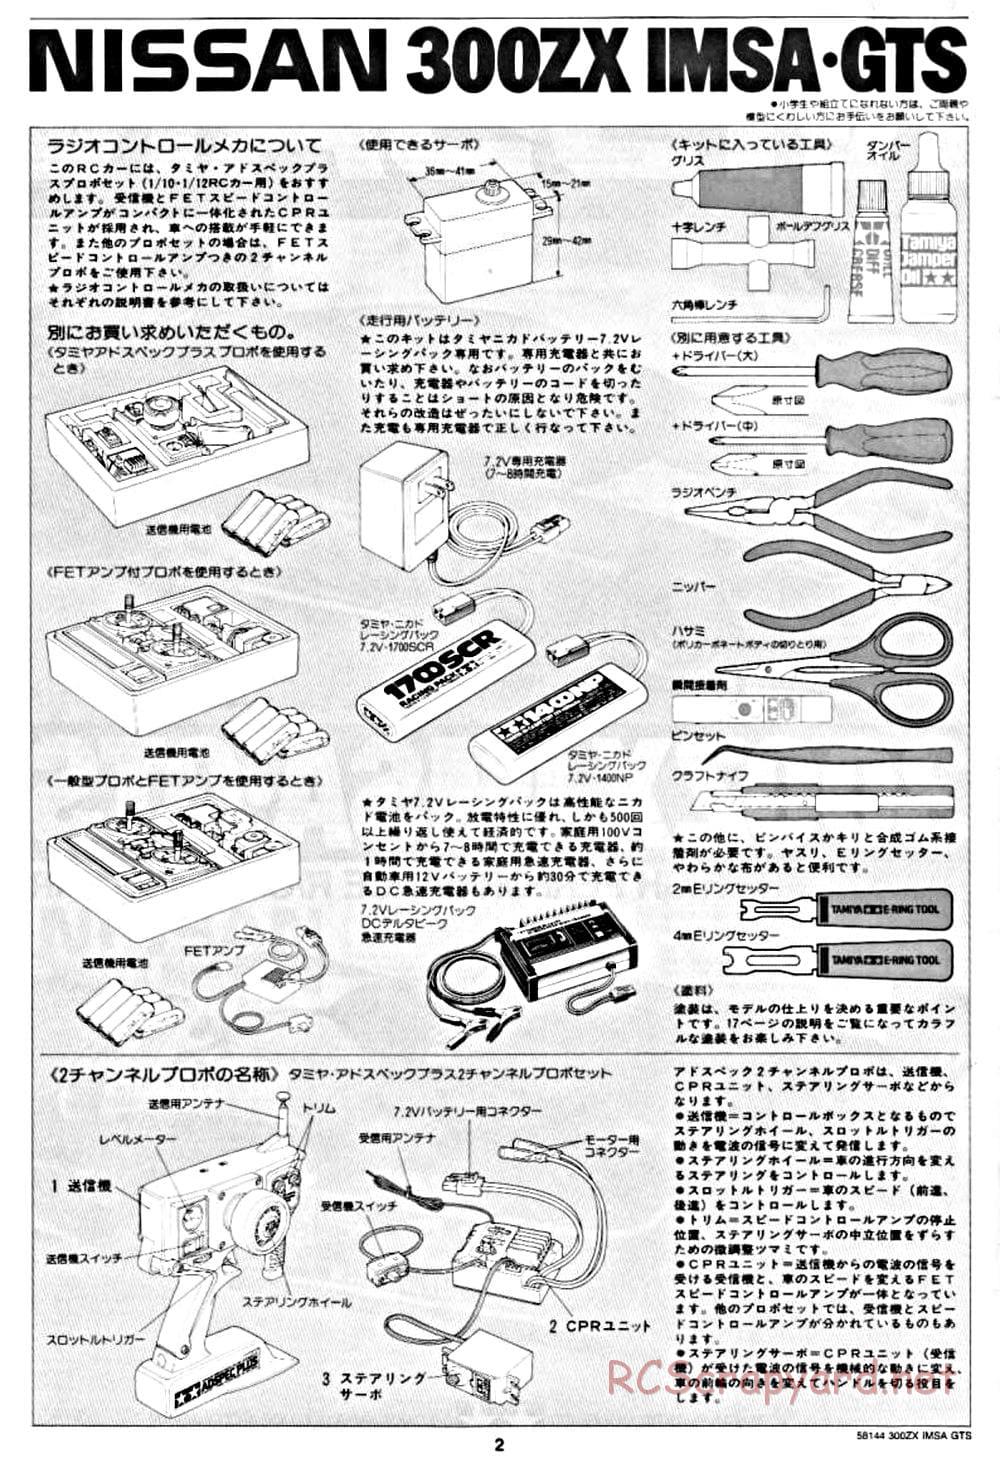 Tamiya - Nissan 300ZX IMSA-GTS - TA-02W Chassis - Manual - Page 2